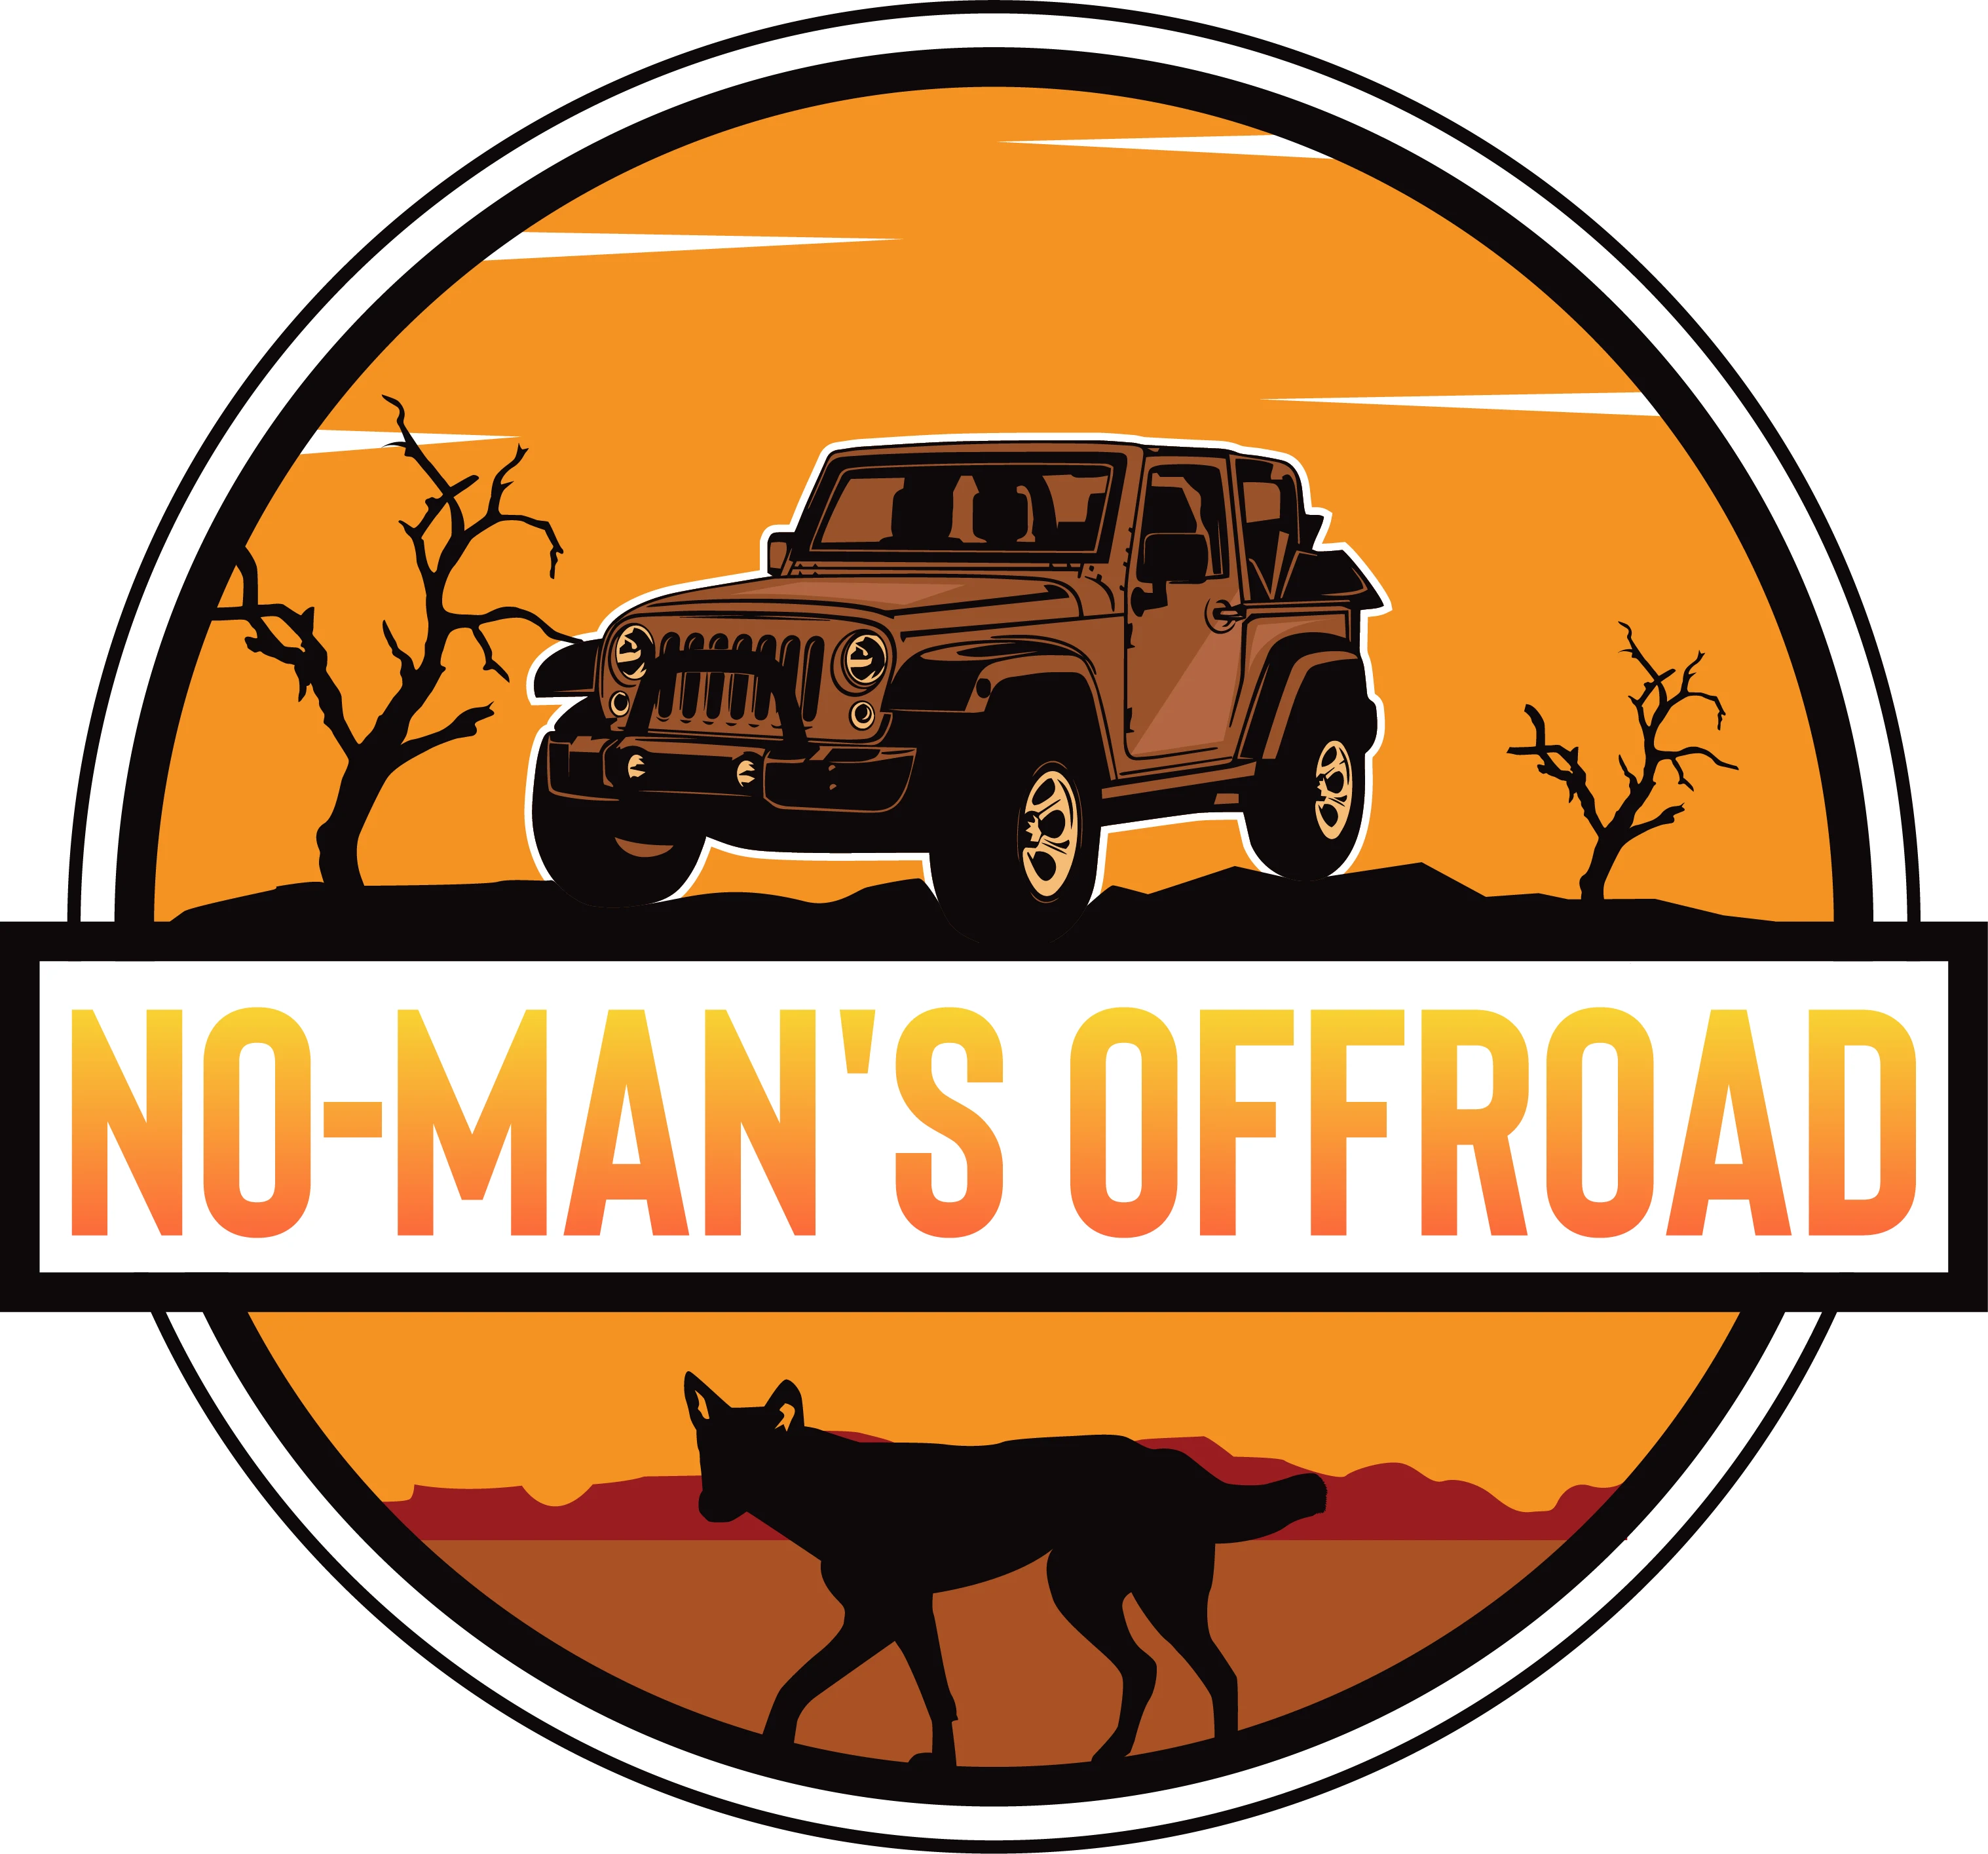 No-Man's Offroad